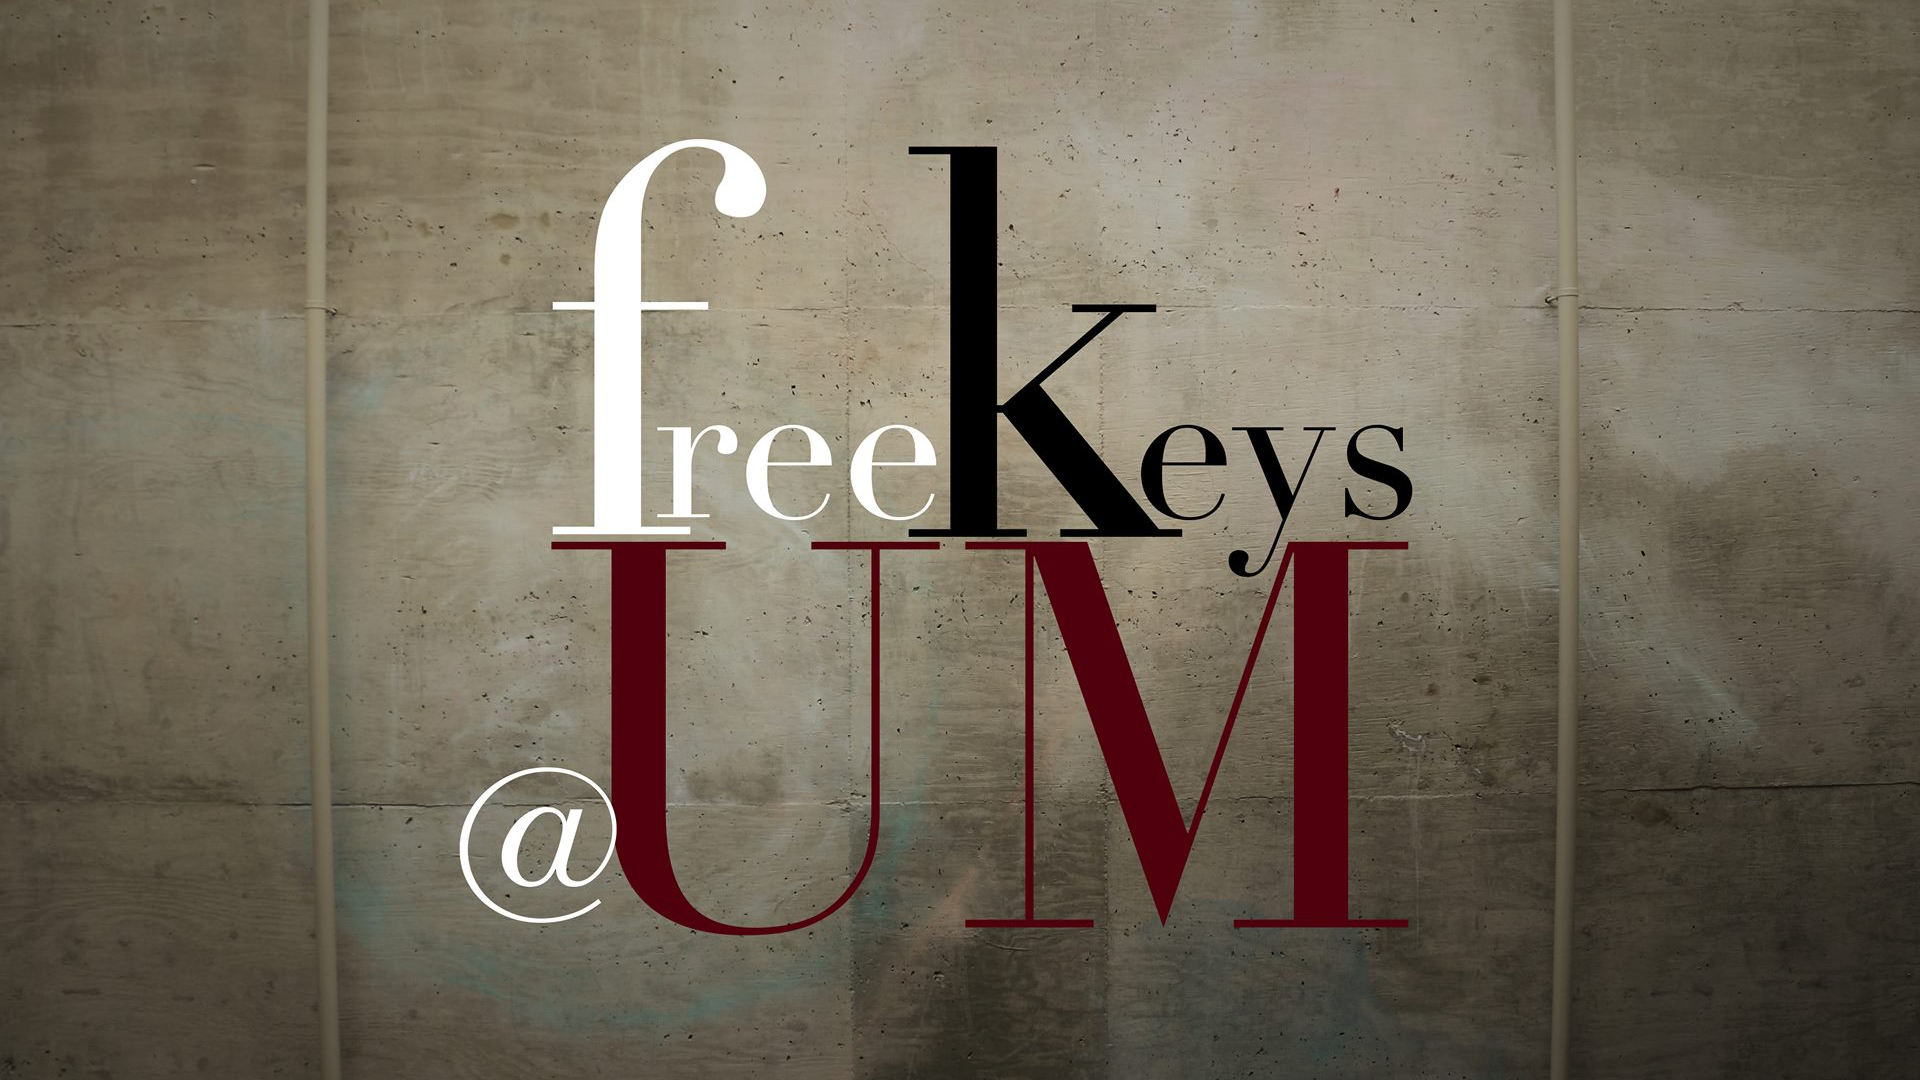 Free Keys UMass